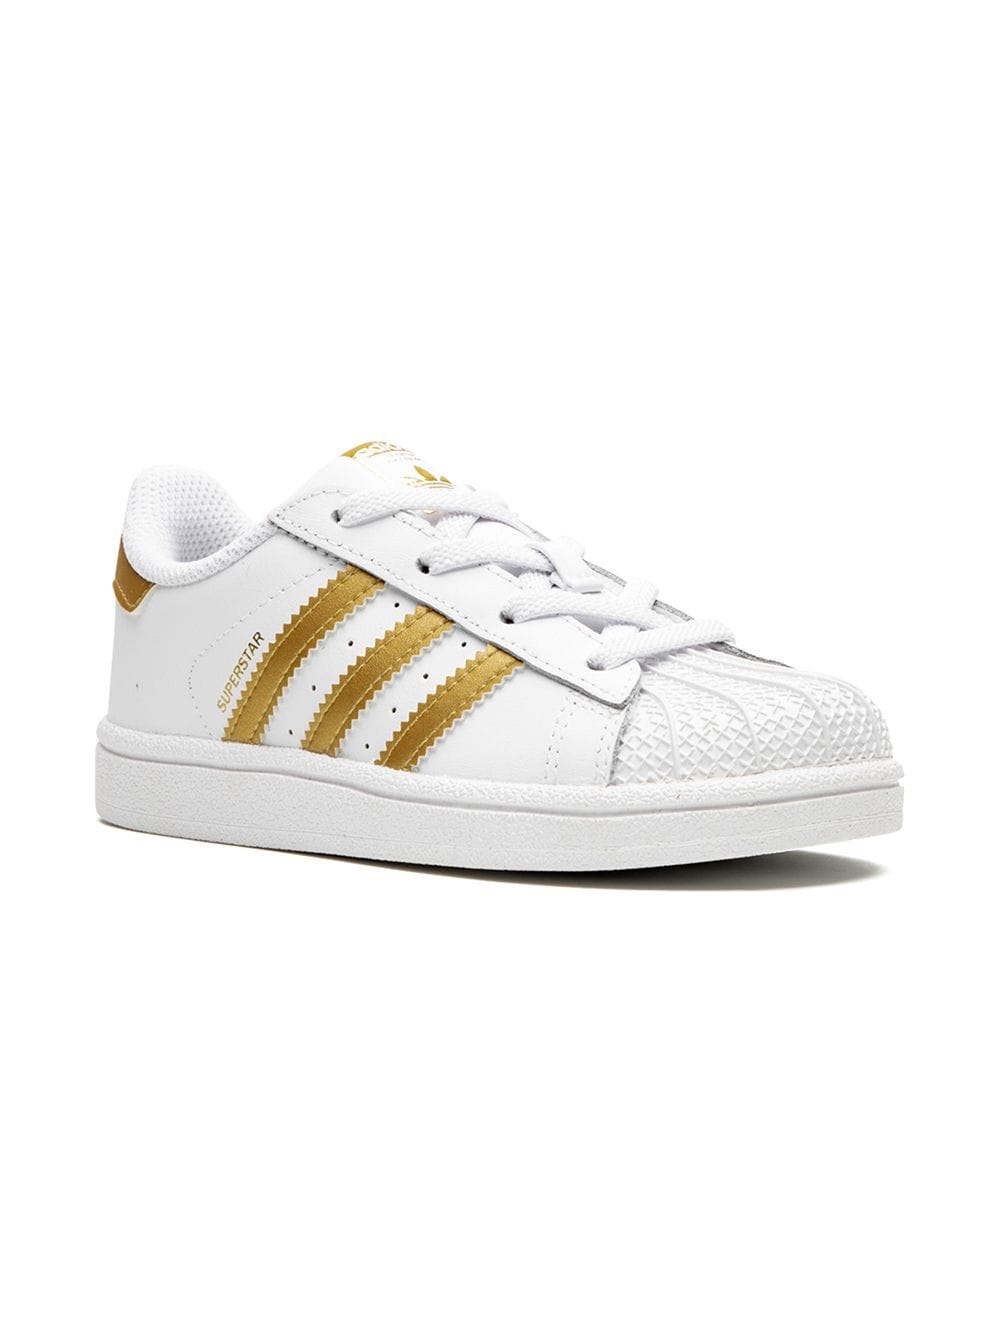 Image 1 of adidas Kids Superstar I "White/Metallic Gold" sneakers